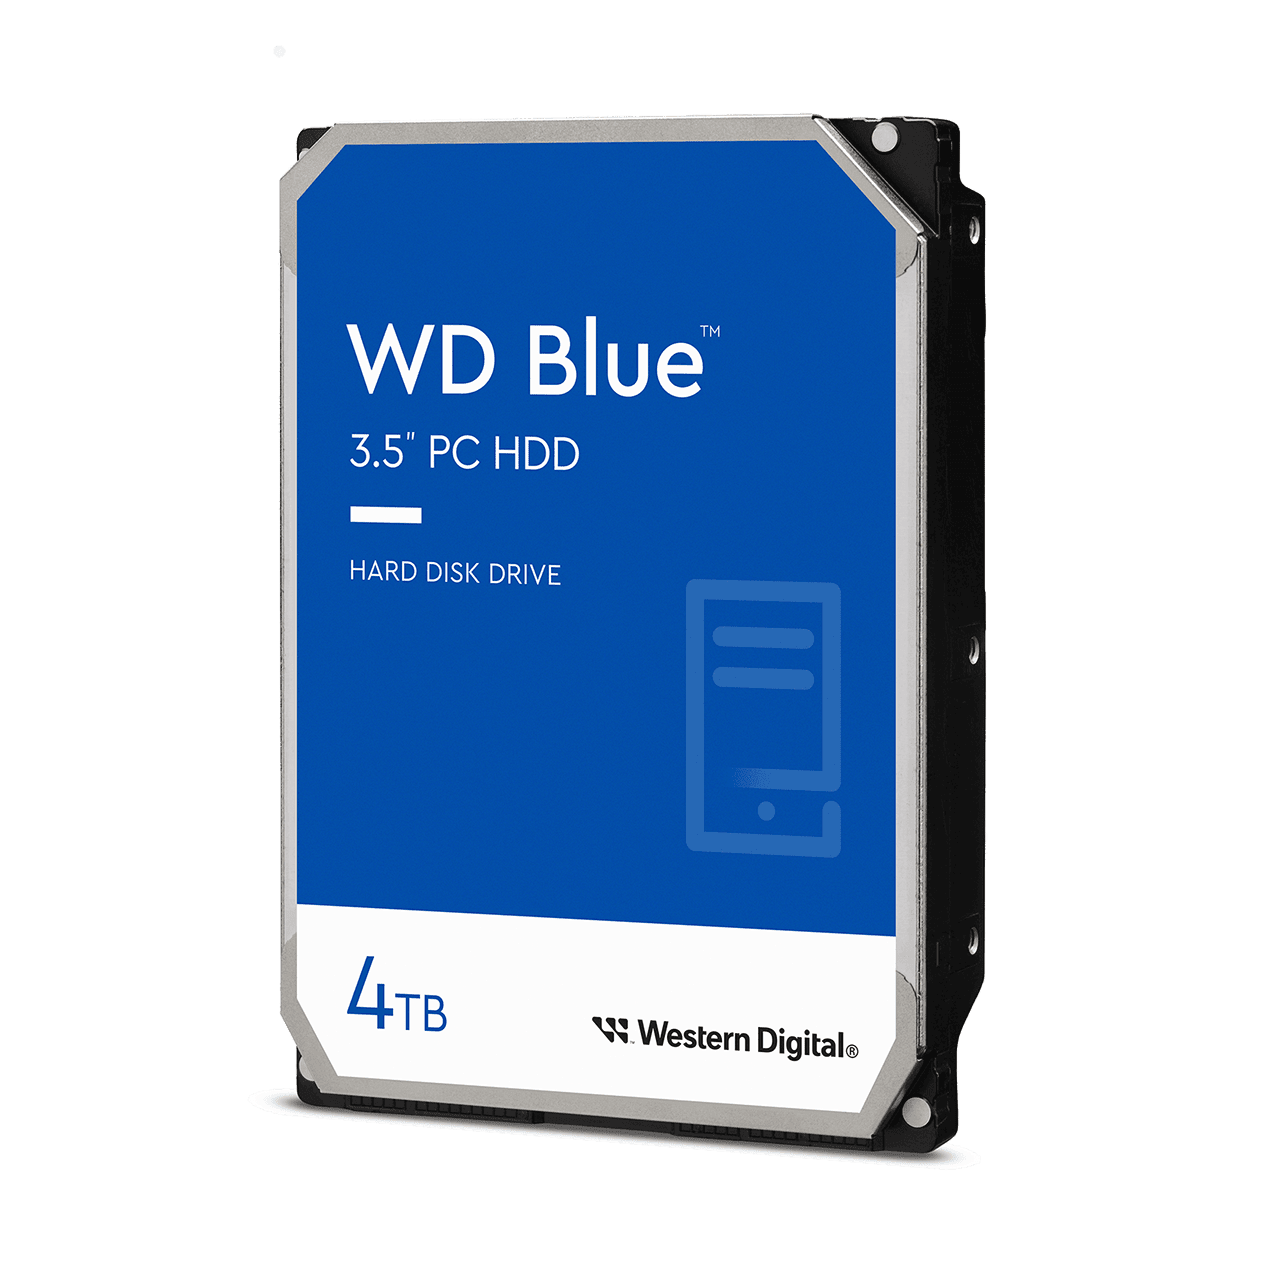 WD Blue 3.5in PC Hard Drive - 4TB - Image10